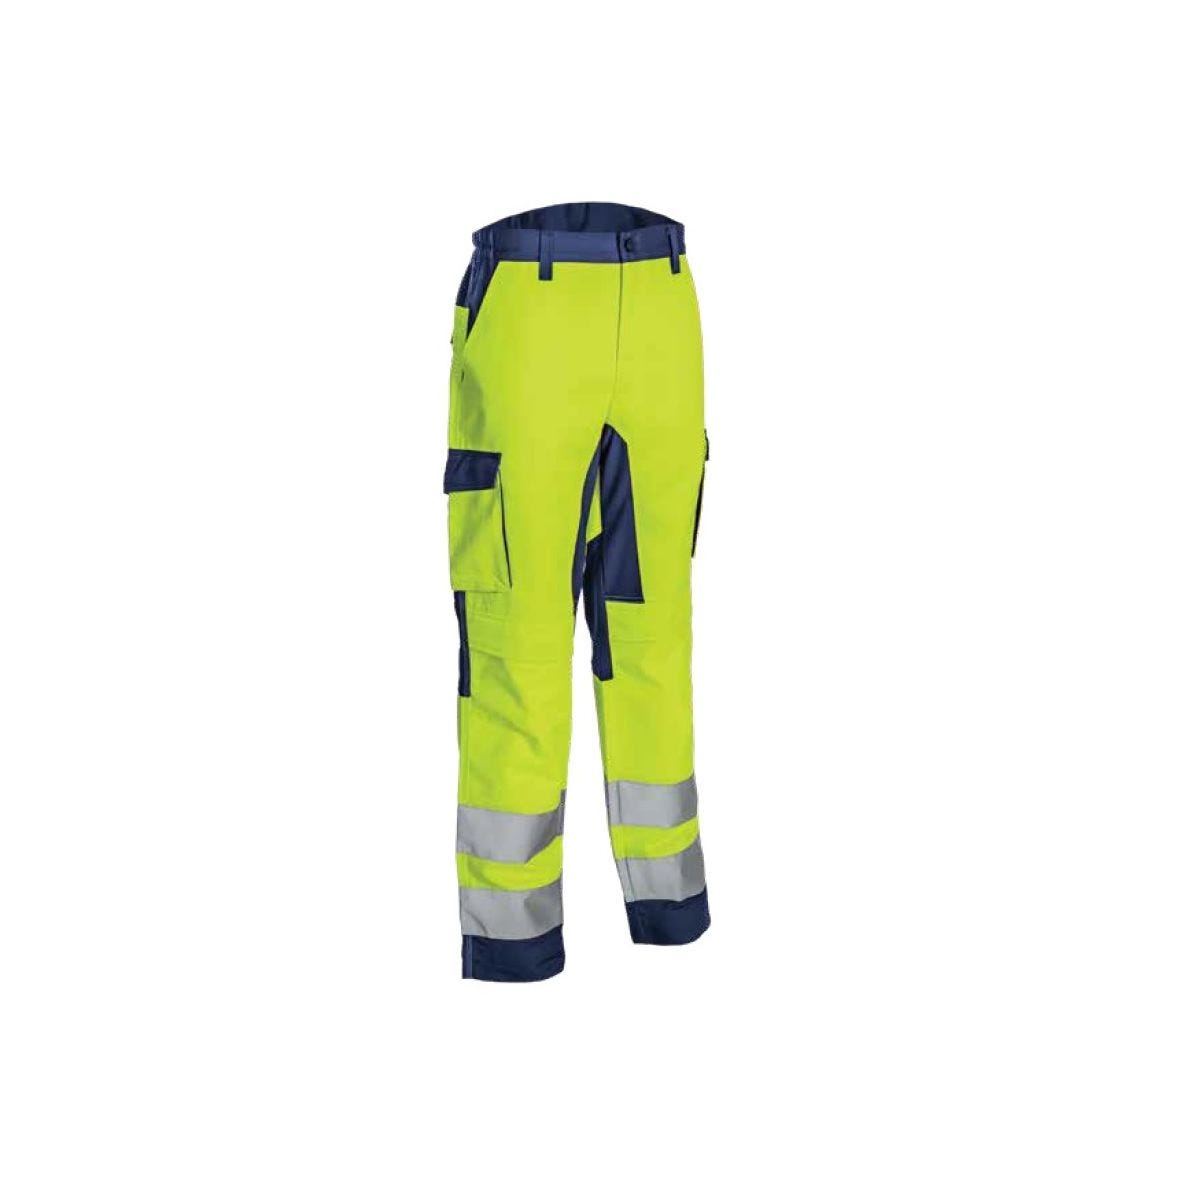 Pantalon haute visibilité HIBANA Jaune et Marine - Coverguard - Taille S 0